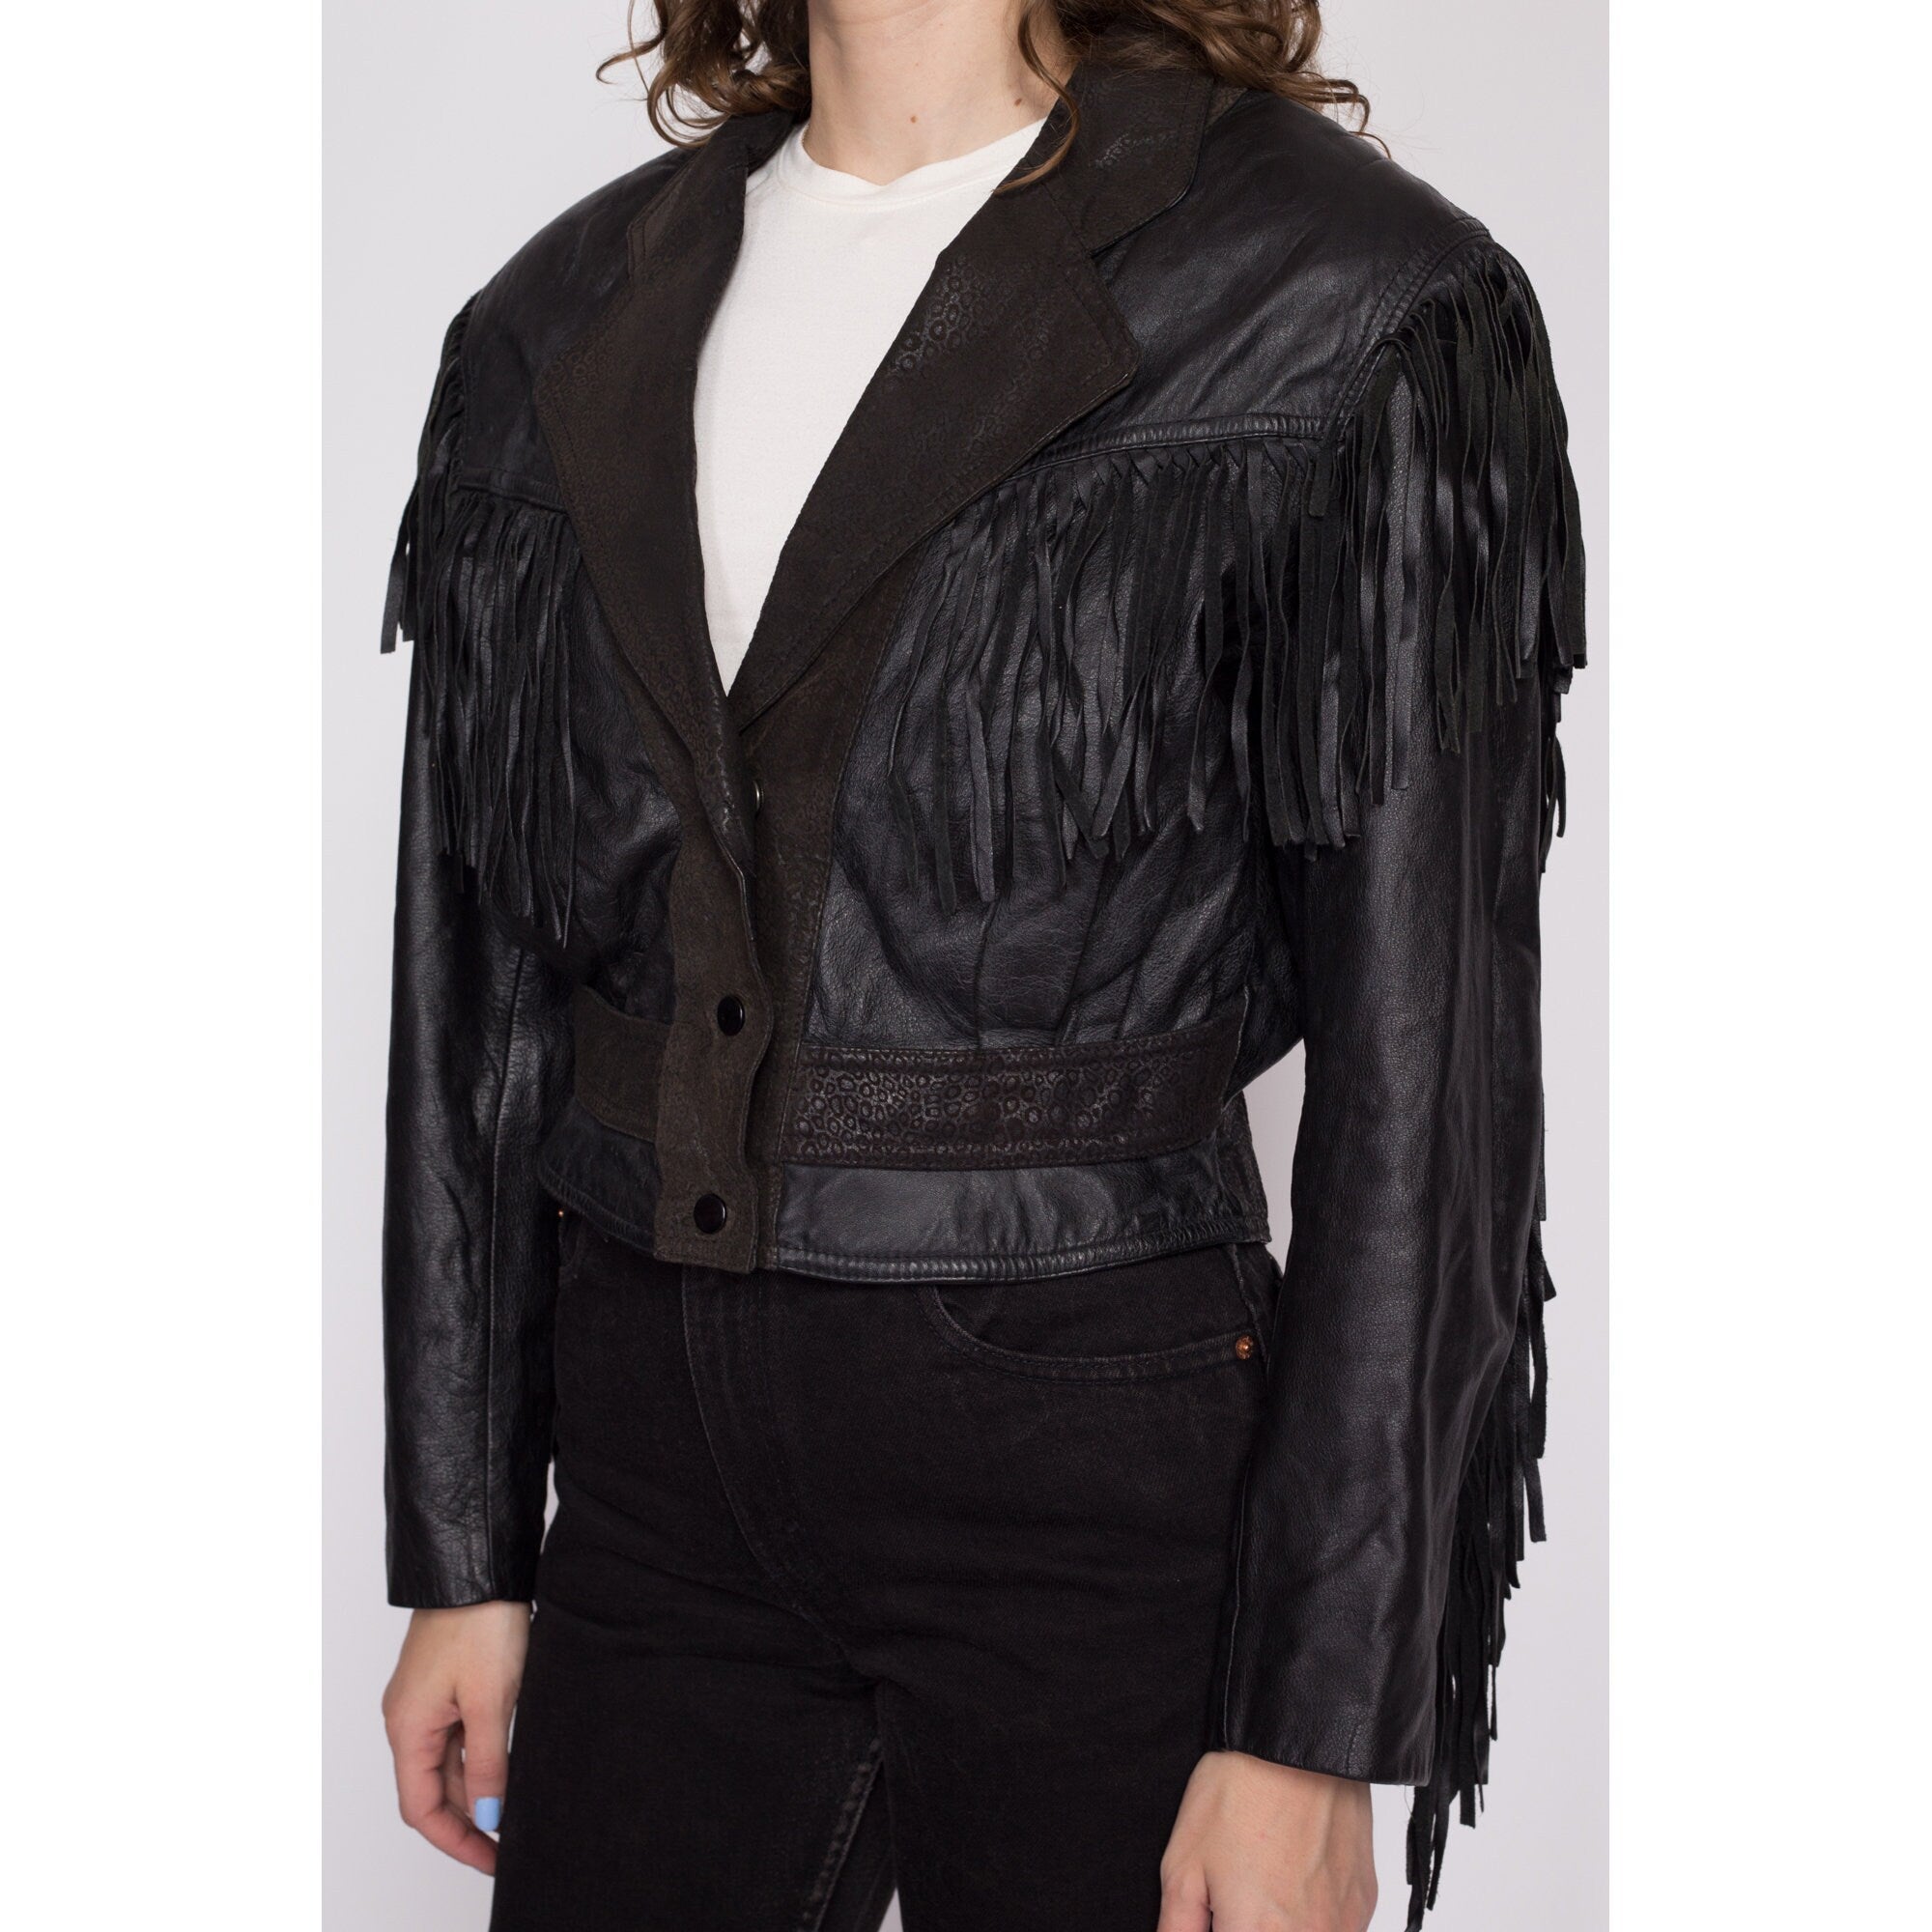 Medium 80s Black Leather Cropped Fringe Jacket – Flying Apple Vintage